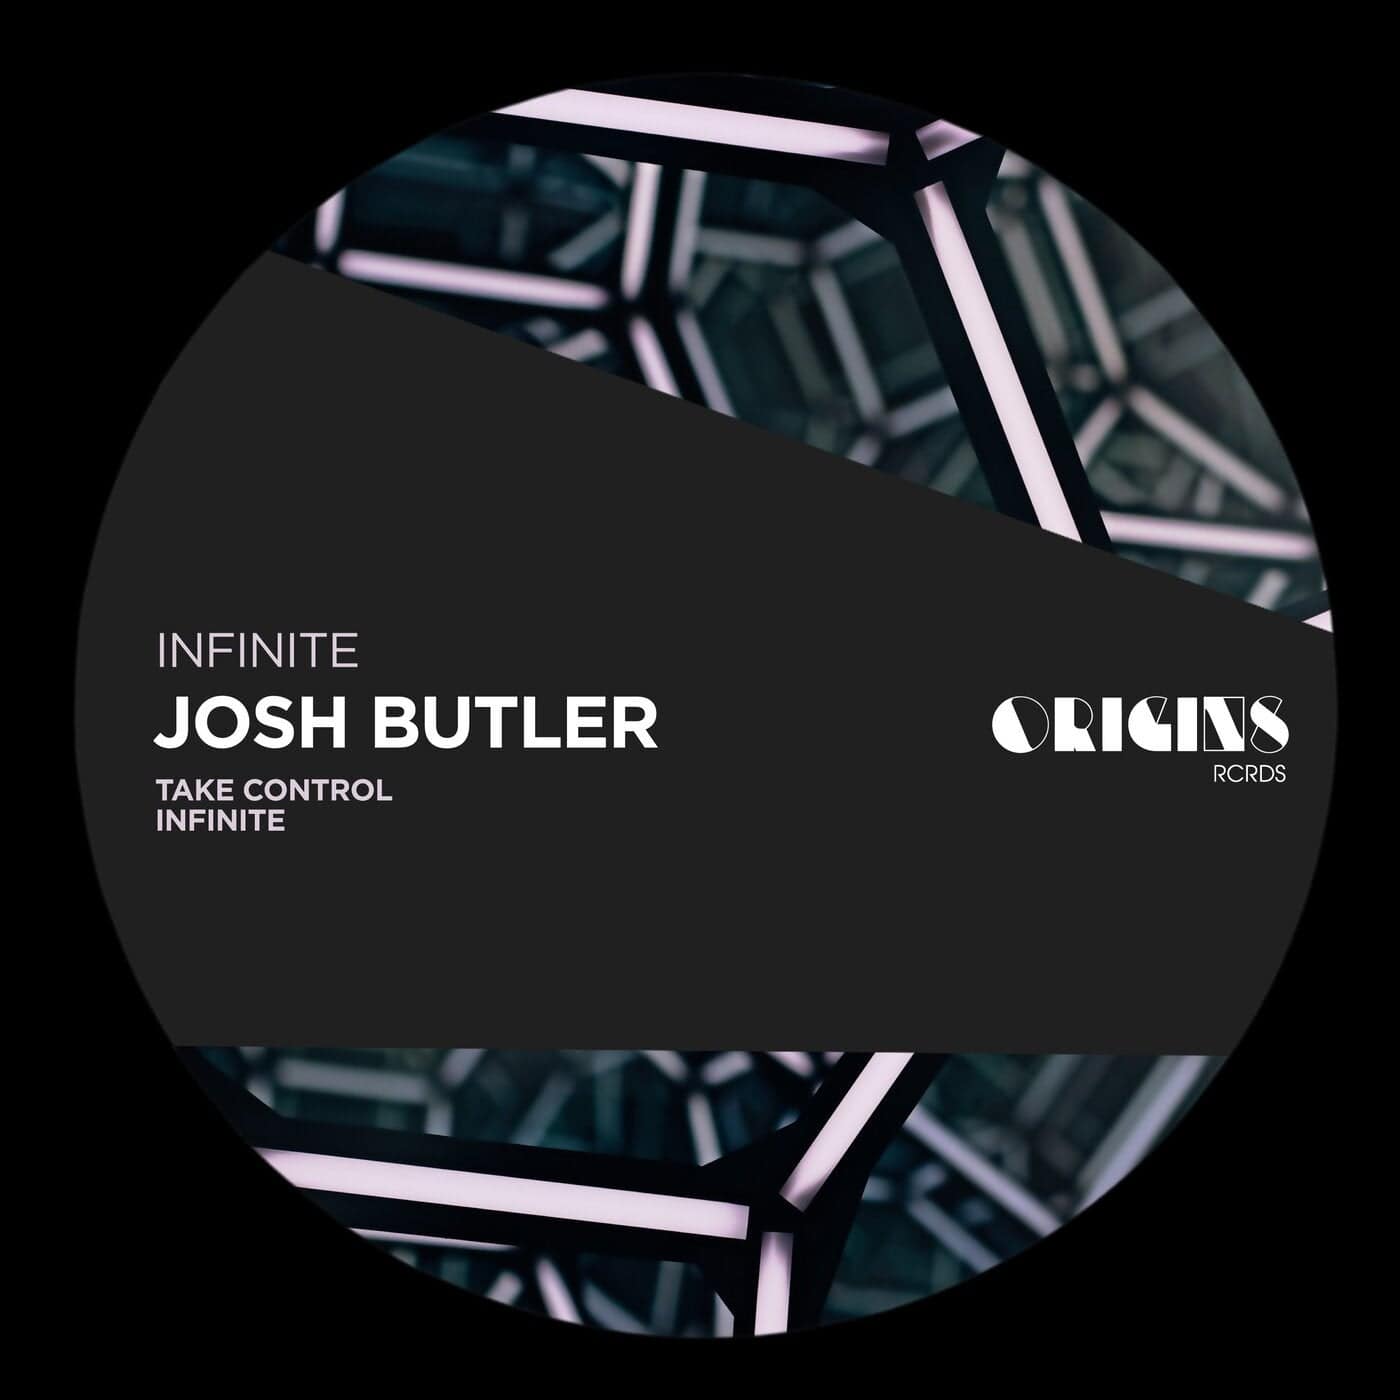 image cover: Josh Butler - Infinite / ORIGINS052